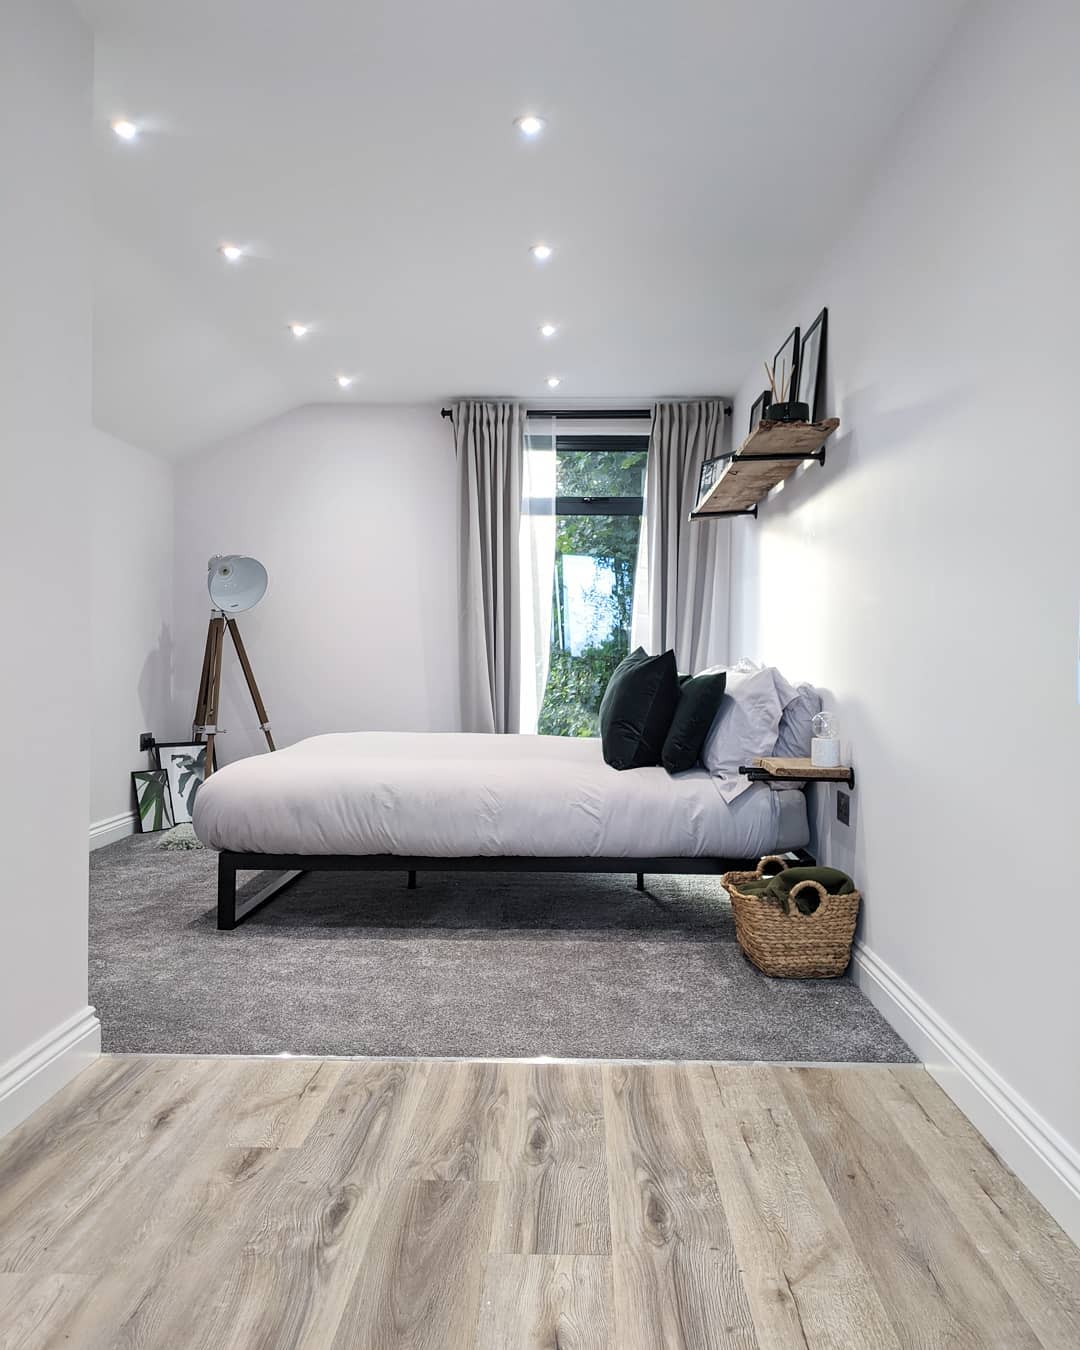 small bedroom garage wood wall shelf wicker clothes basket gray carpet floor 